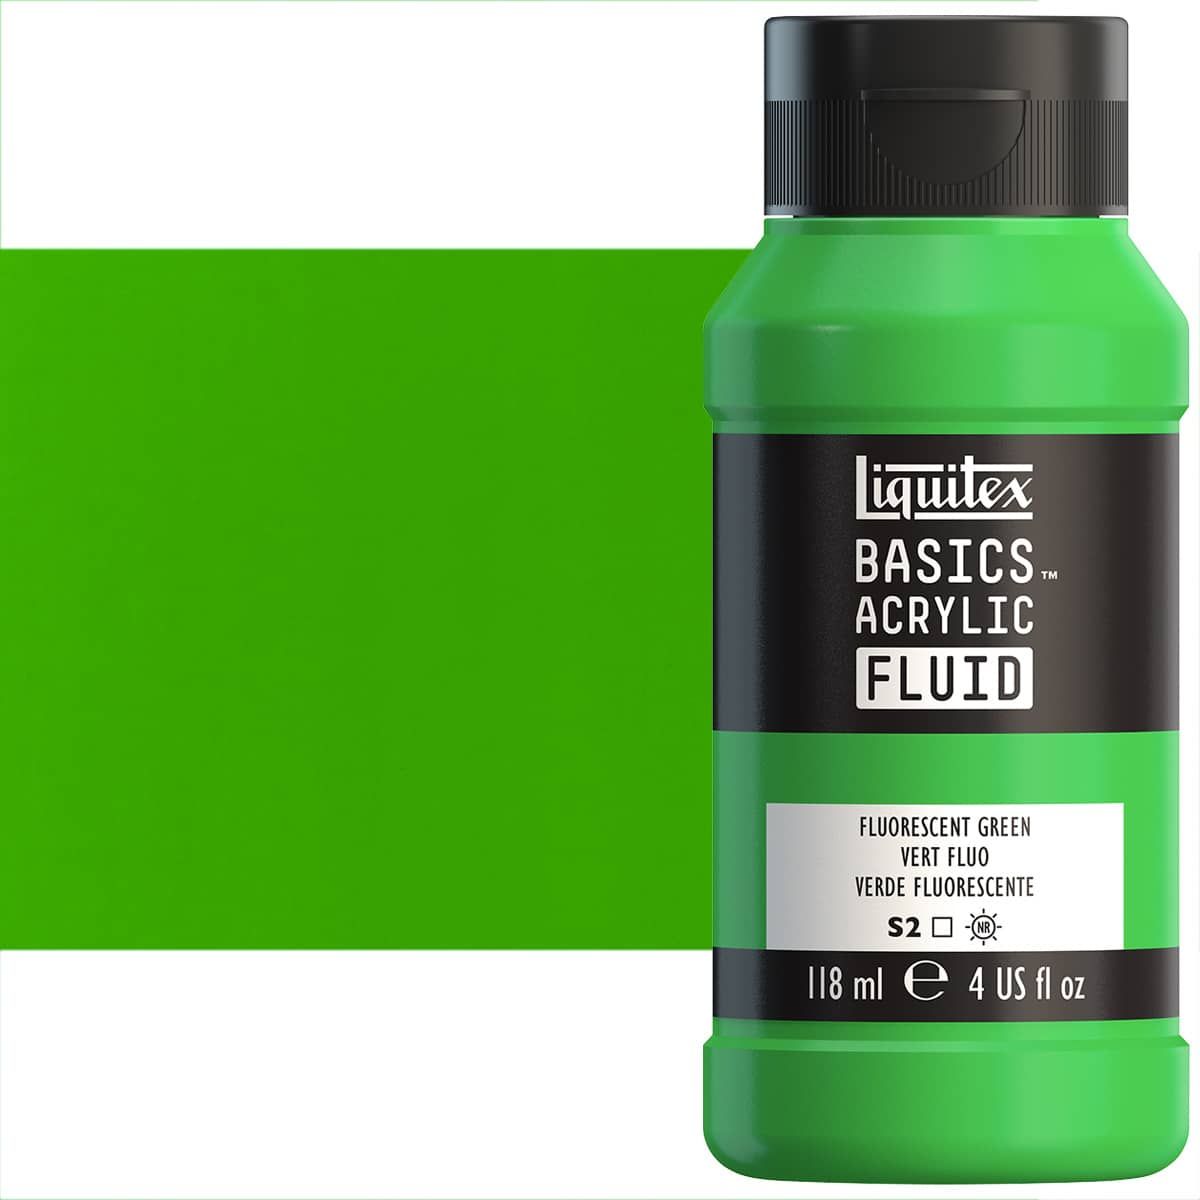 Liquitex Basics Acrylic Fluid Paint - Light Green Permanent, 118 ml